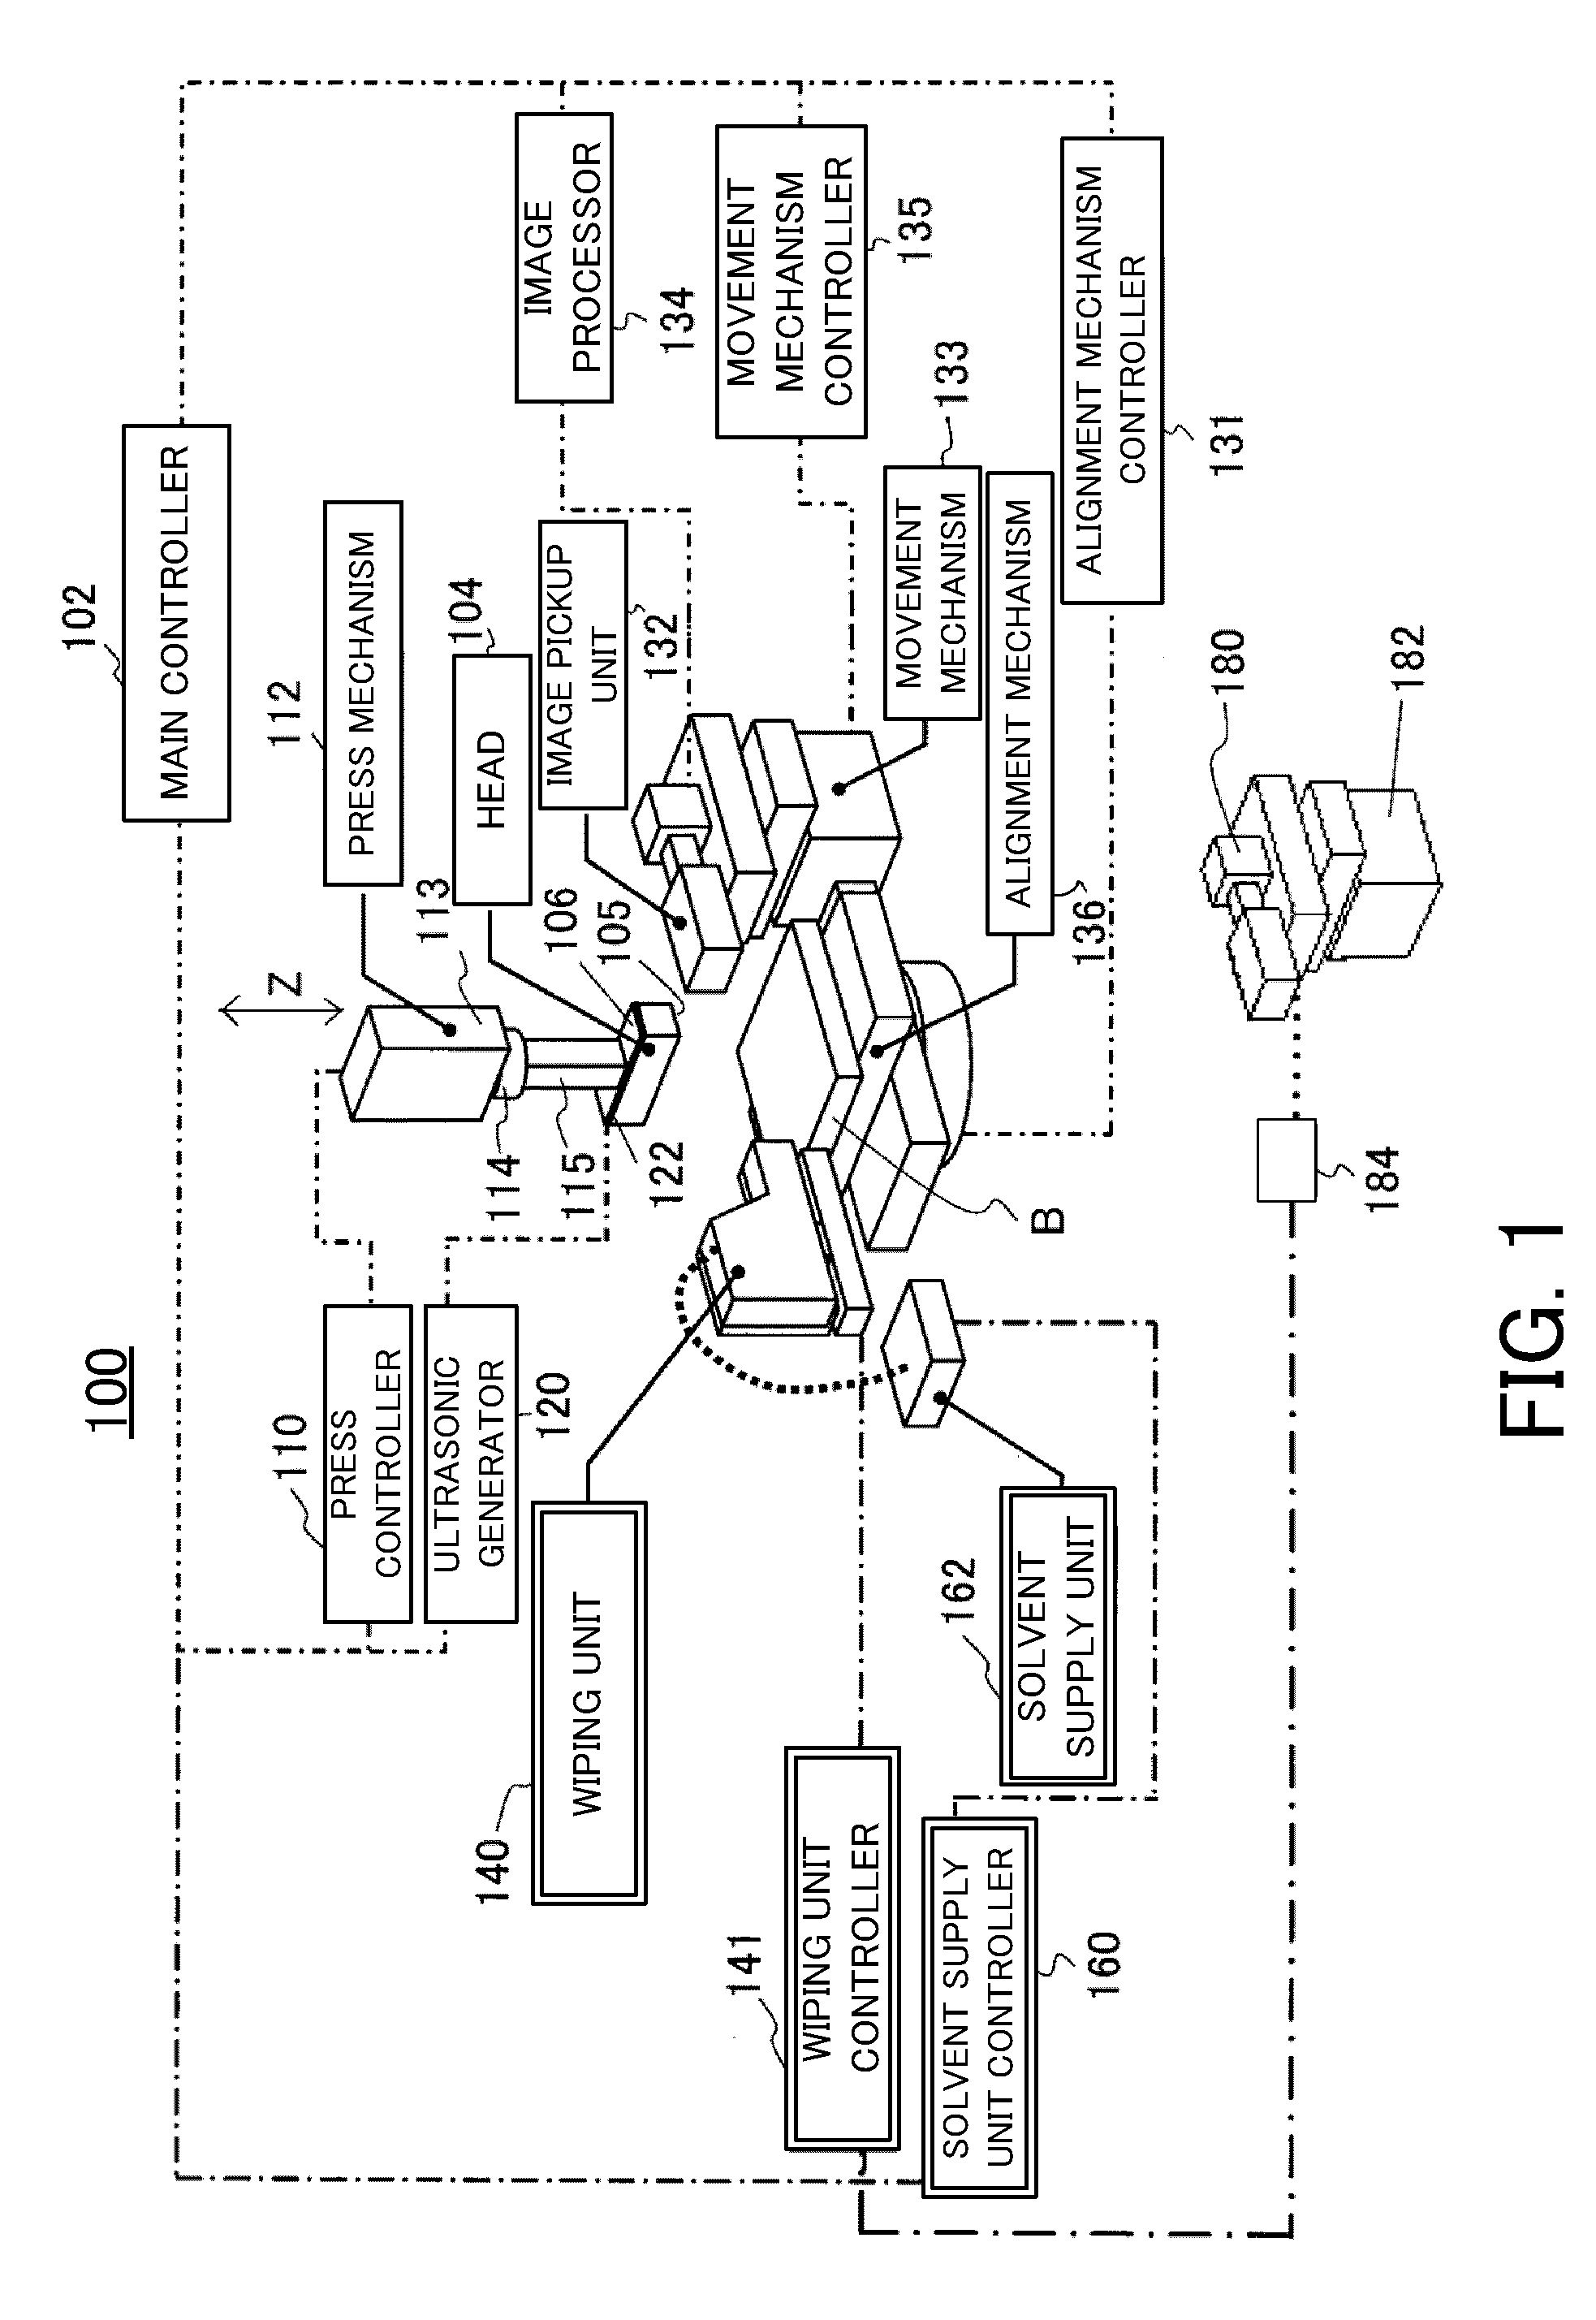 Ultrasonic bonding apparatus